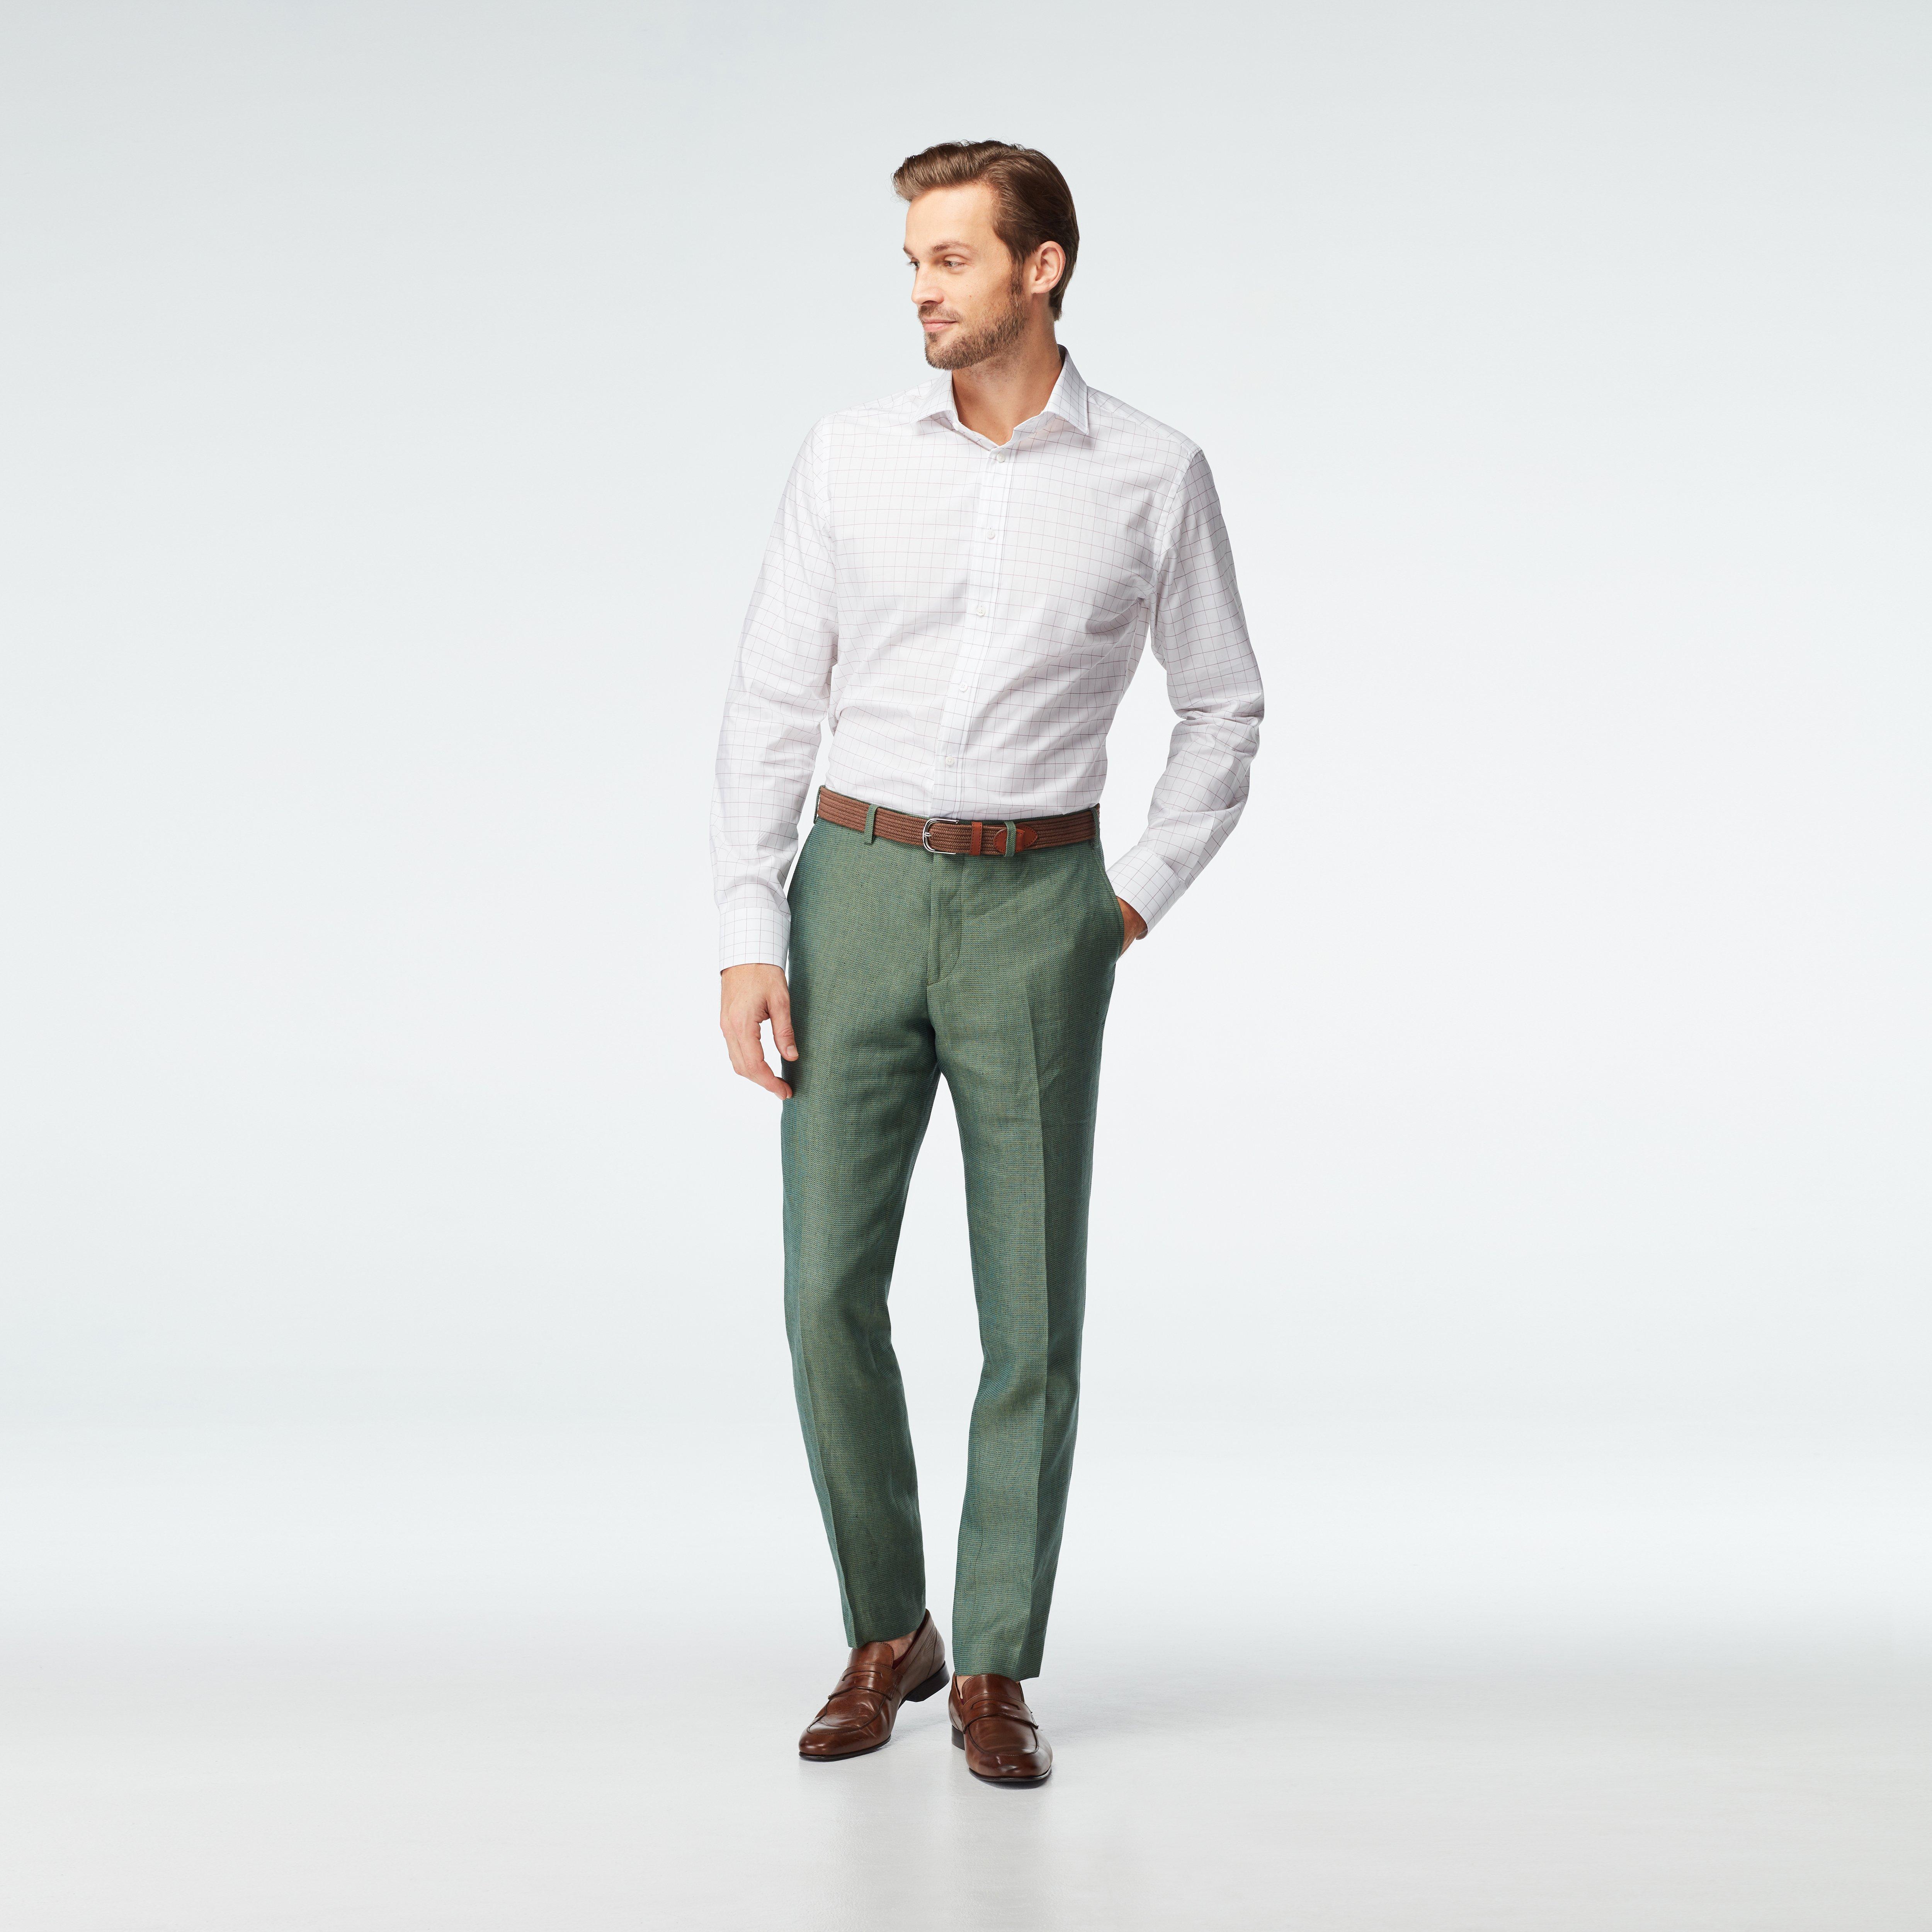 Custom Pants Made For You - Sailsbury Linen Green pants | INDOCHINO